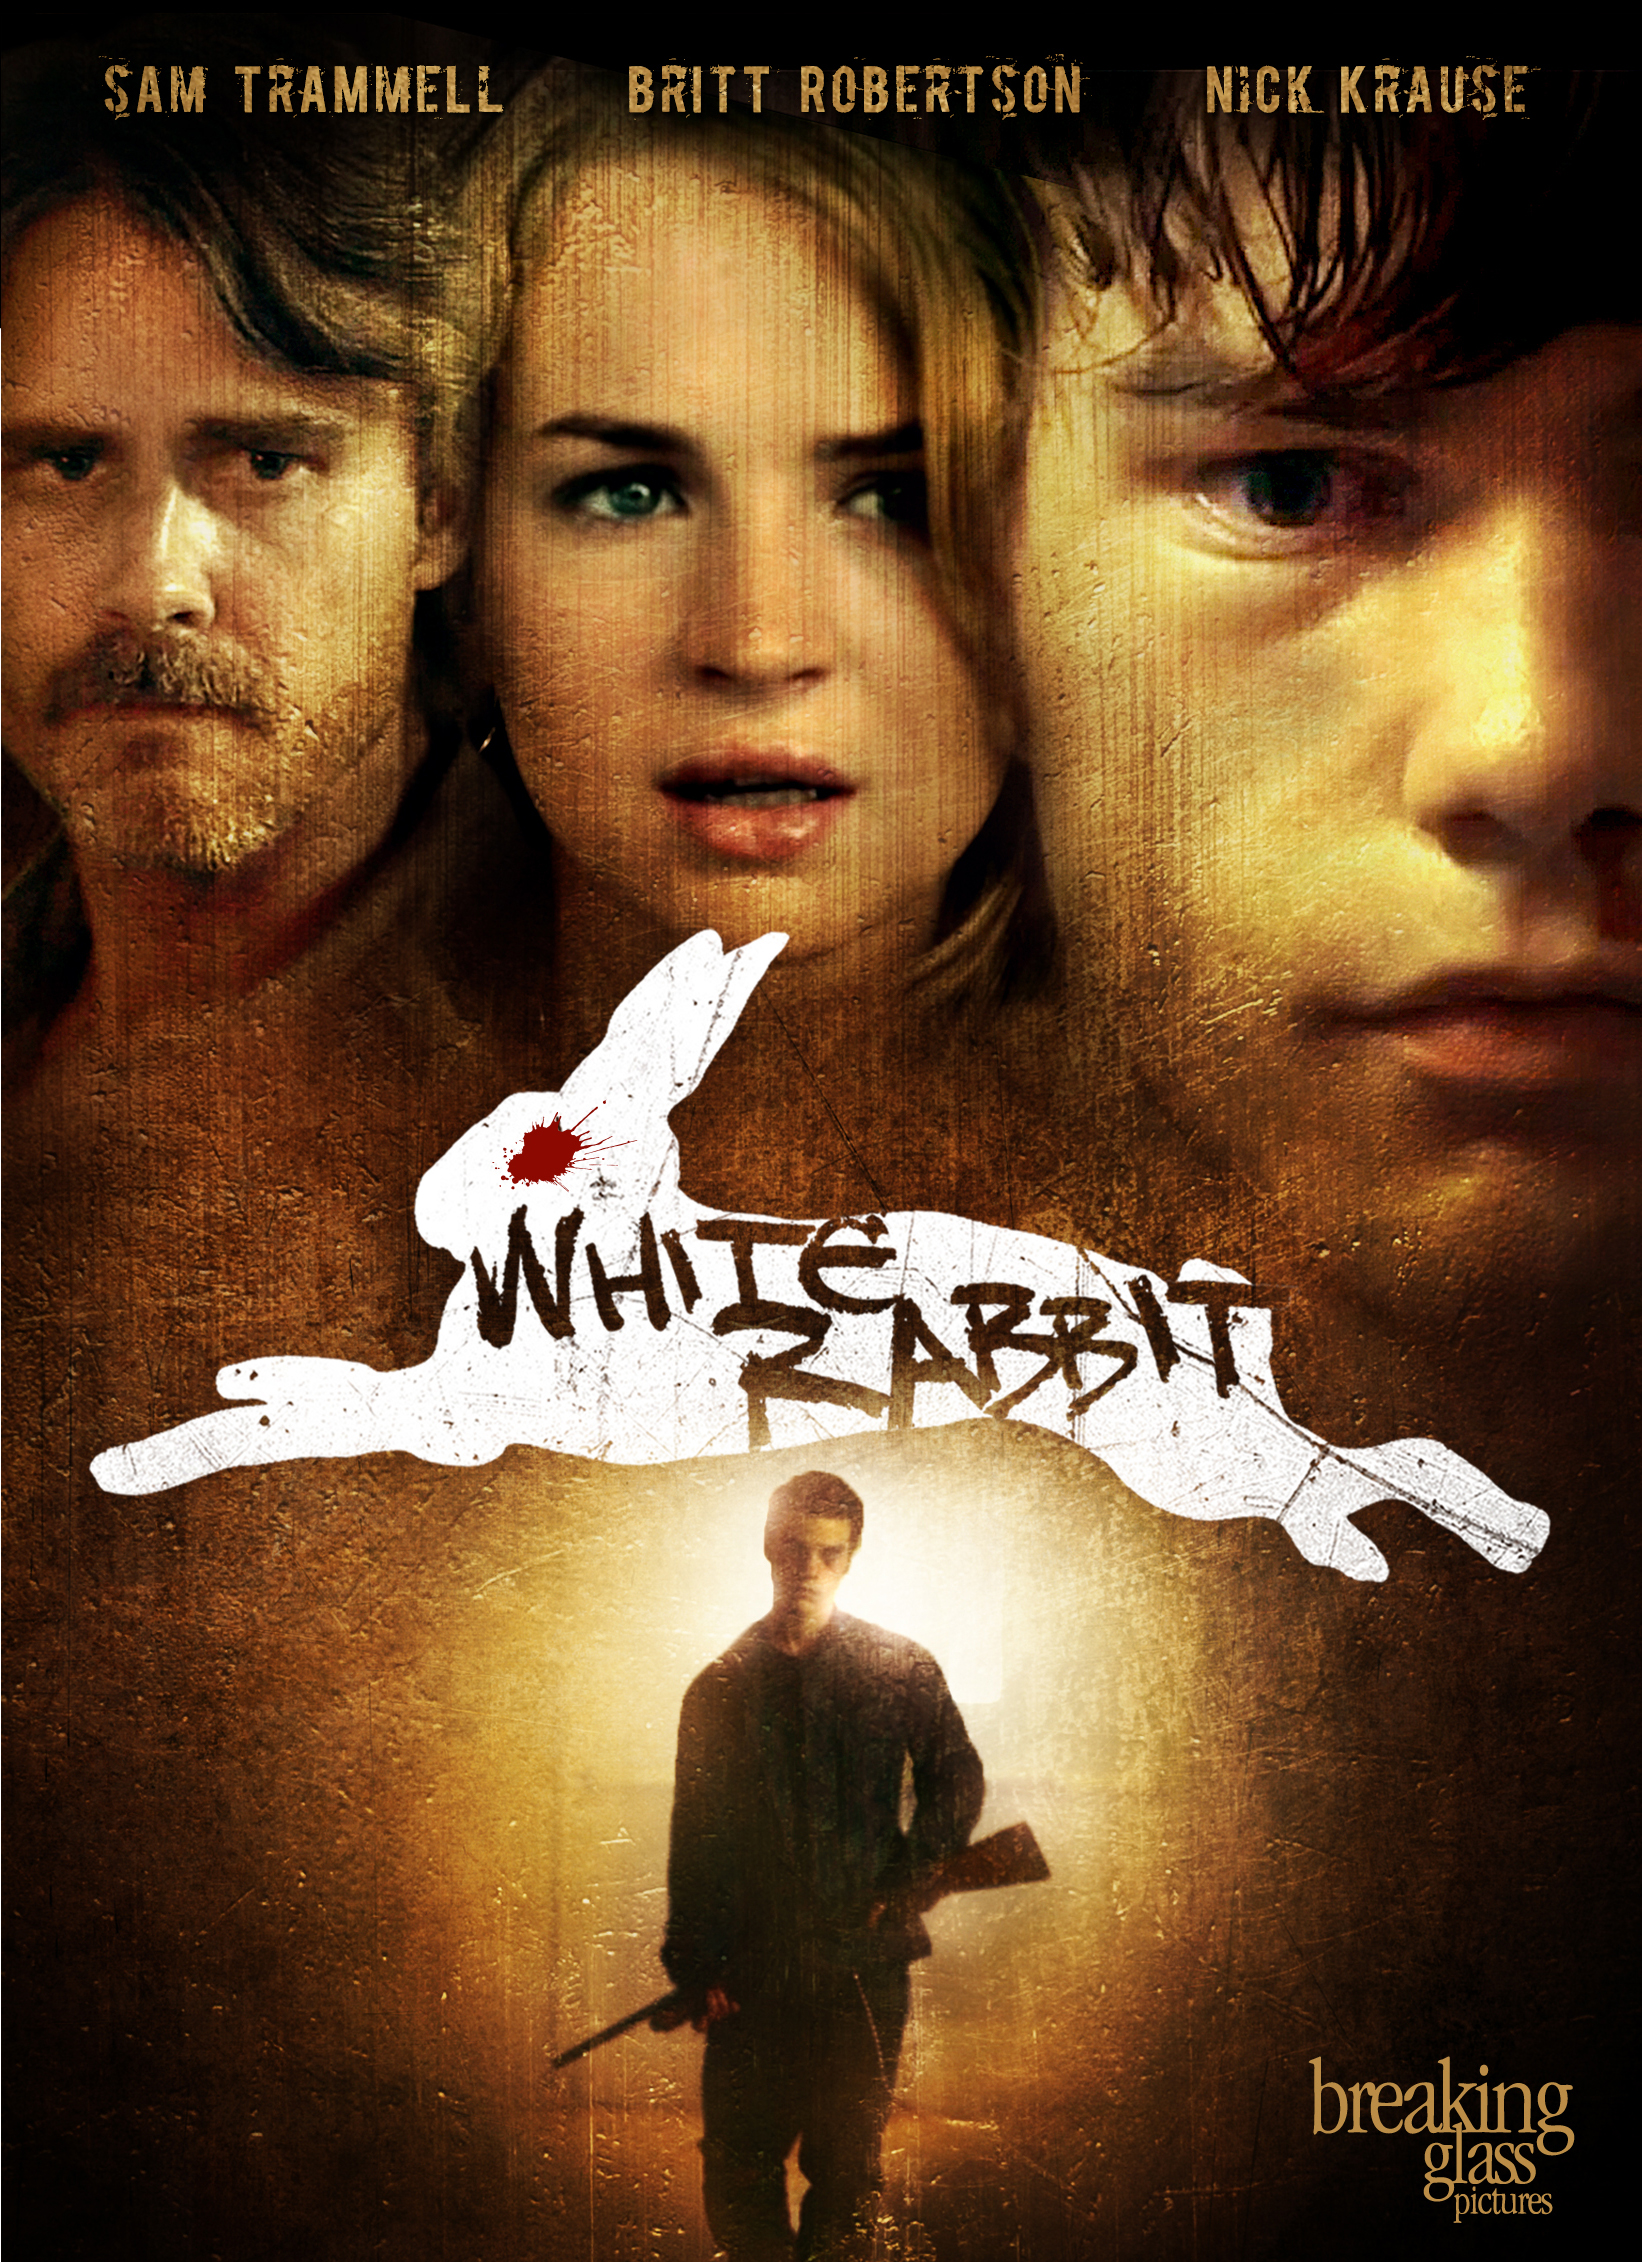 Sam Trammell, Britt Robertson and Nick Krause in White Rabbit (2013)